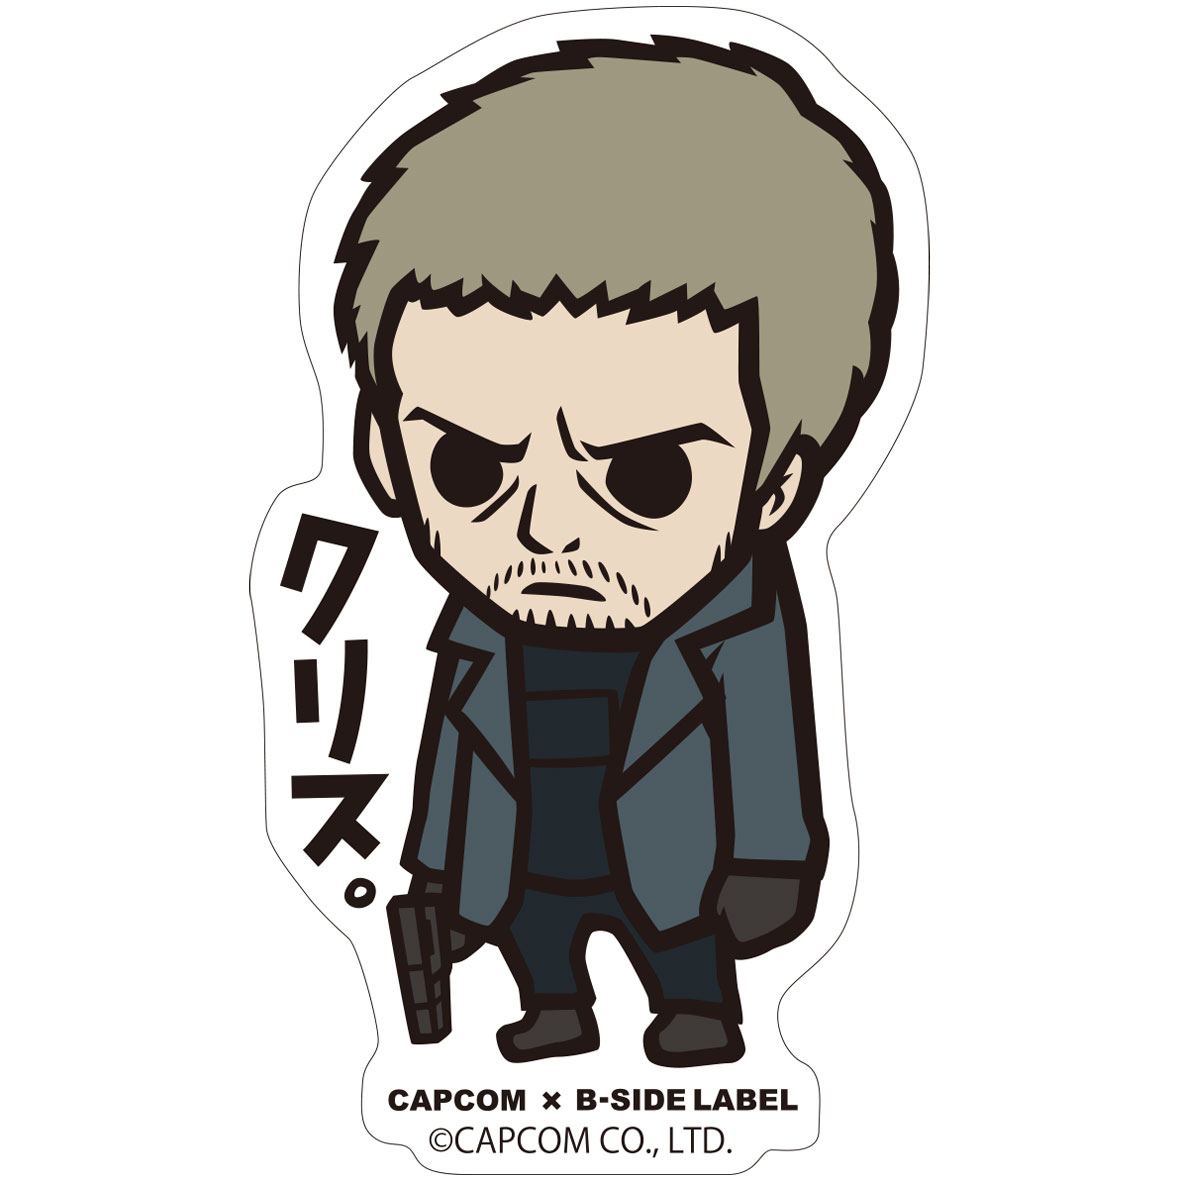 Chile Version 2016 Capcom Big Bang Resident Evil sticker pack